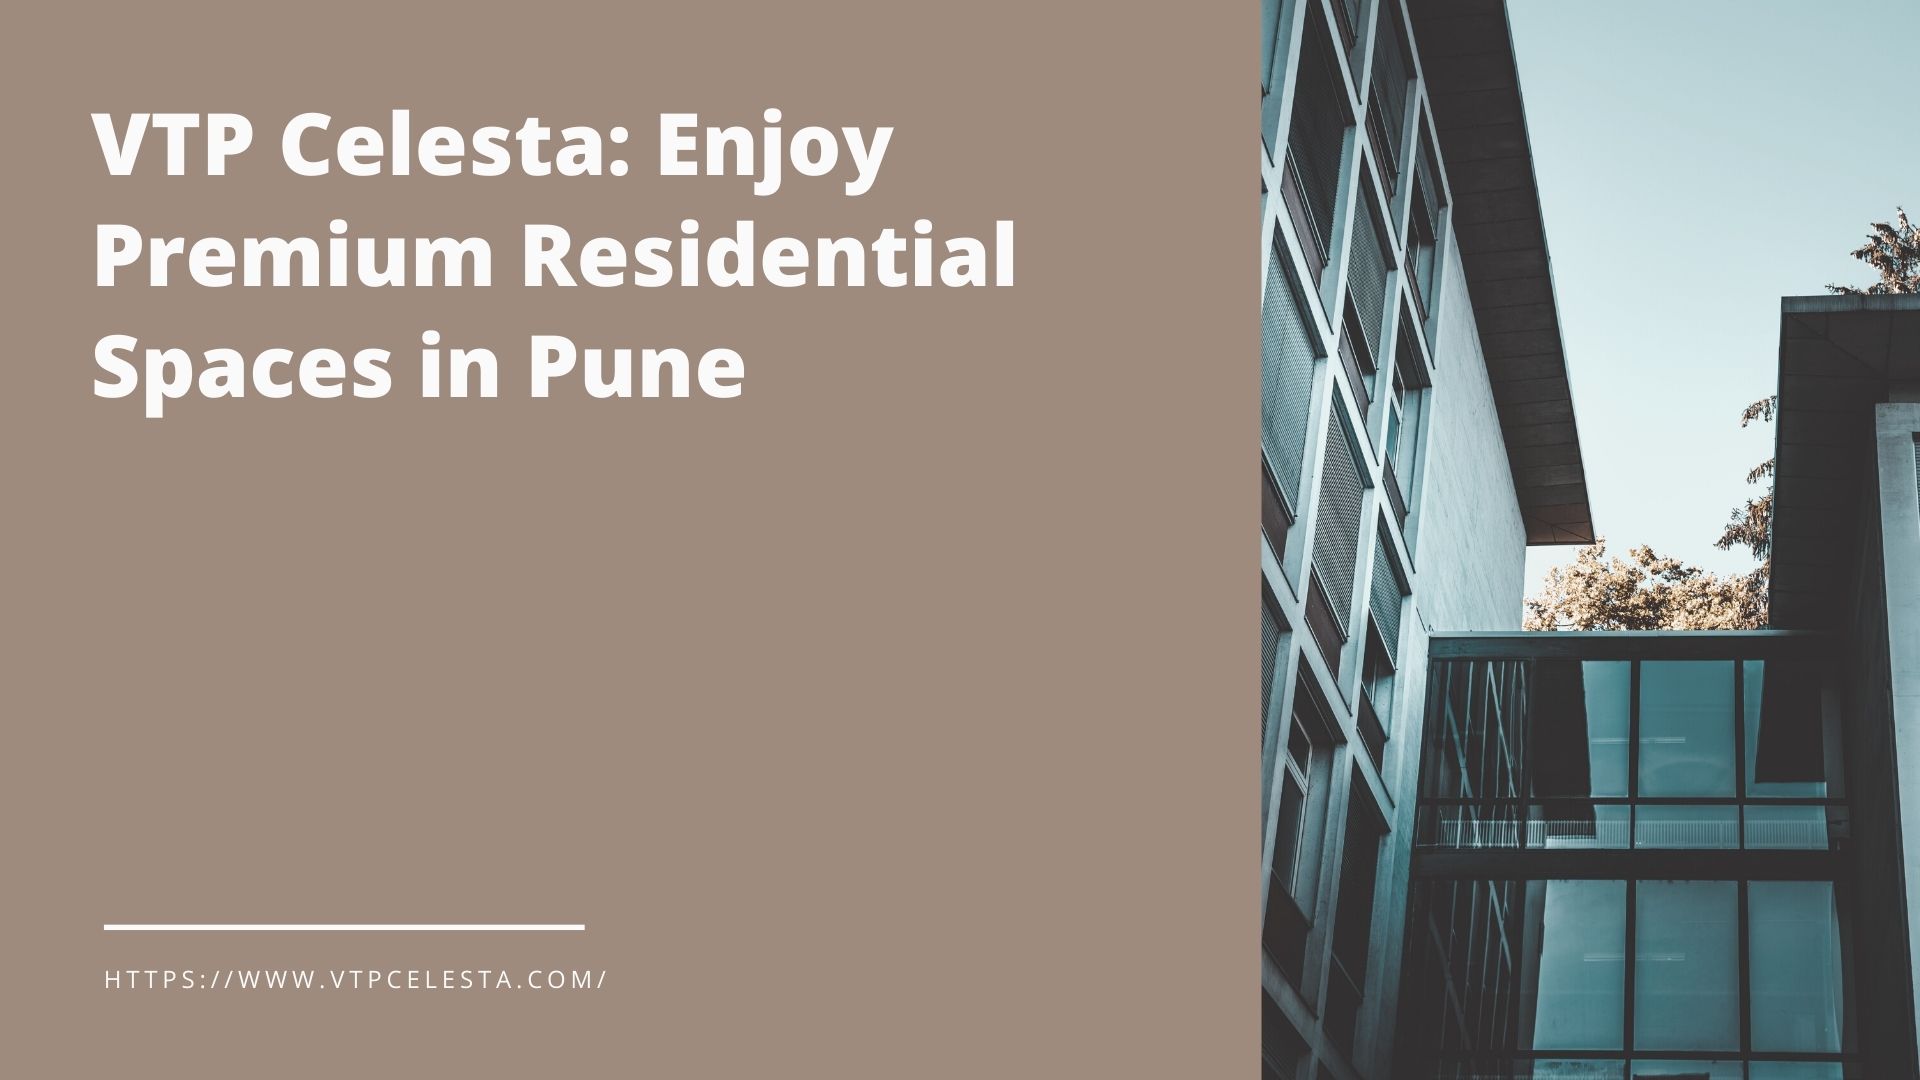 VTP Celesta: Enjoy Premium Residential Spaces in Pune